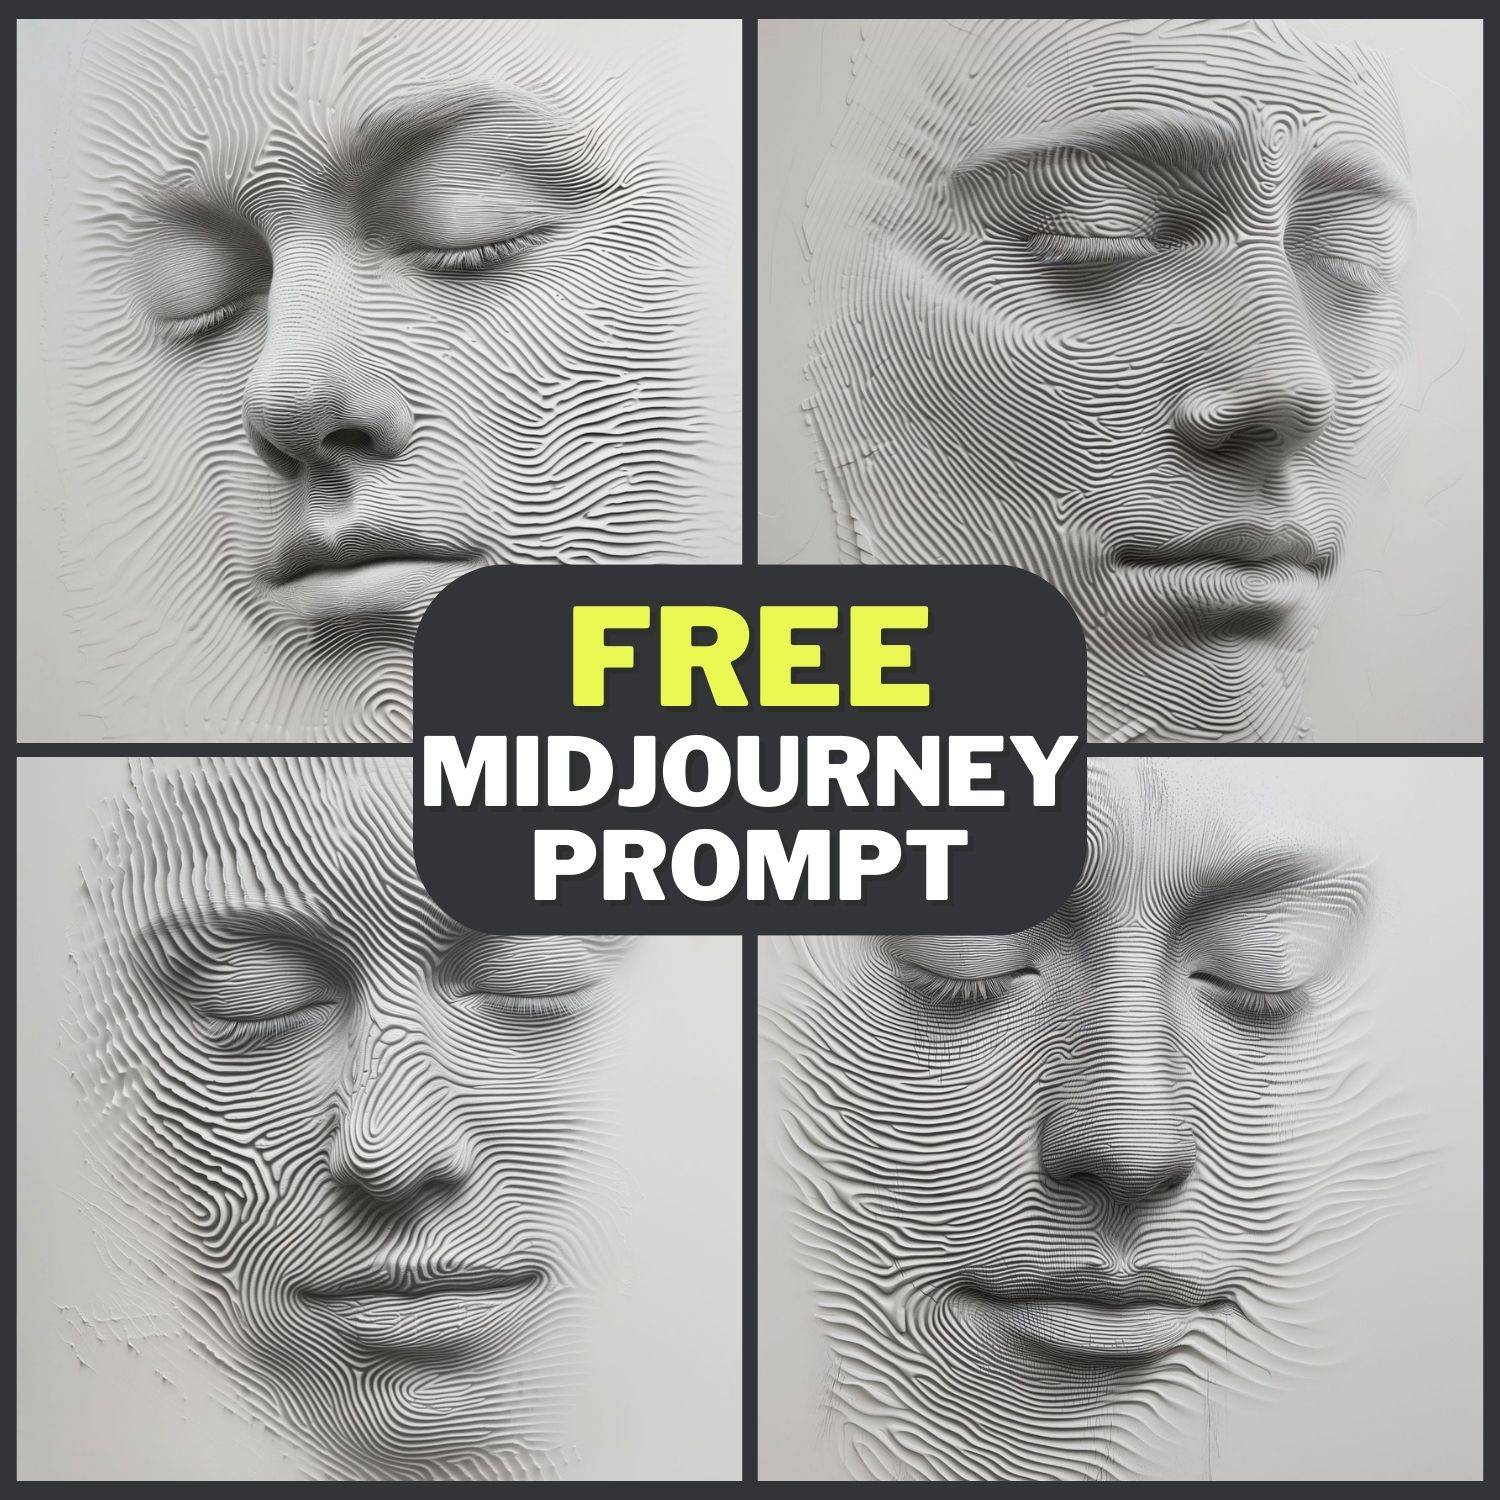 Human Face Fingerprint Free Midjourney Prompt 1